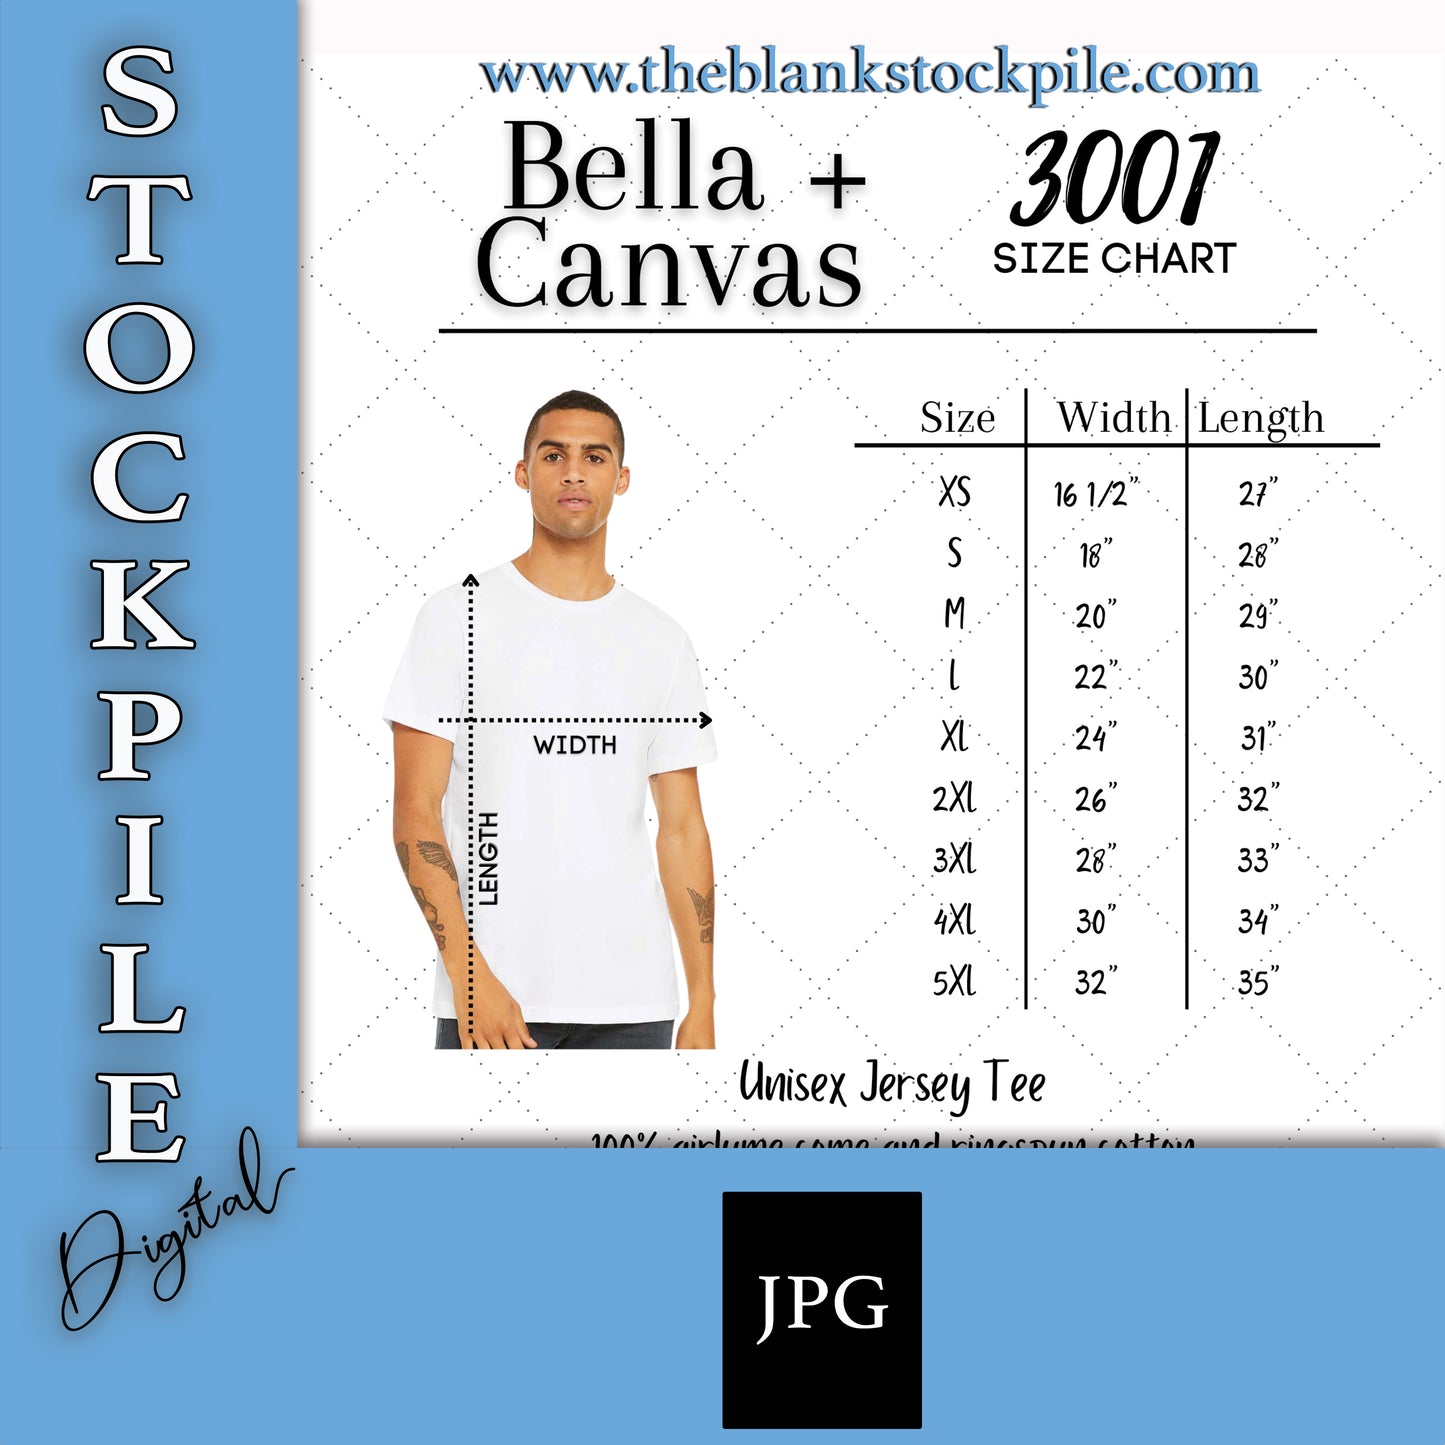 Bella Canvas 3501 Long Sleeve size chart